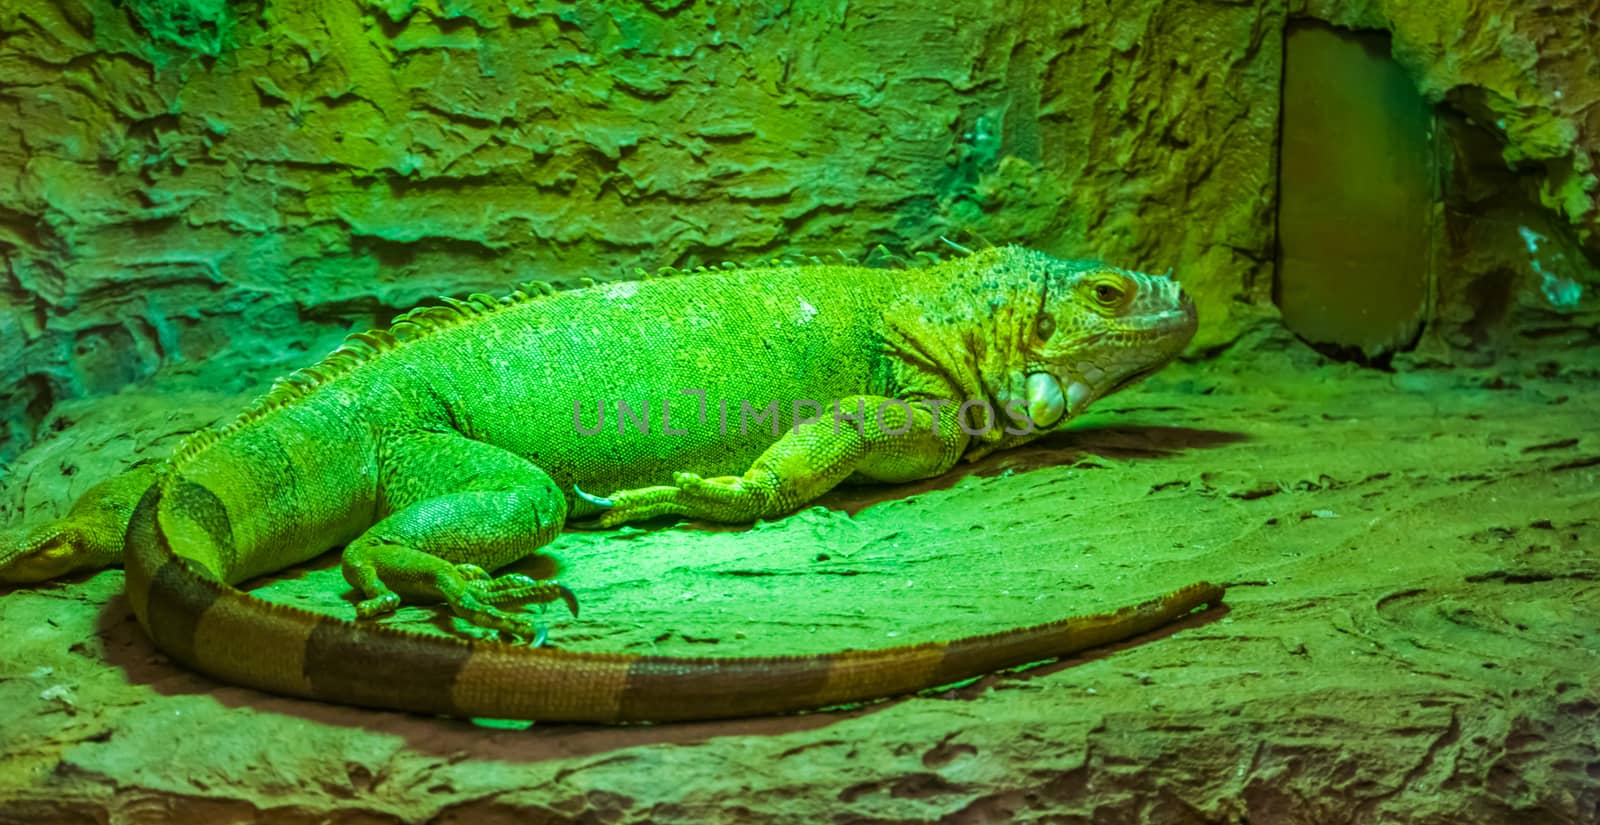 portrait of a green american iguana, popular exotic pet, tropical lizard specie from America by charlottebleijenberg